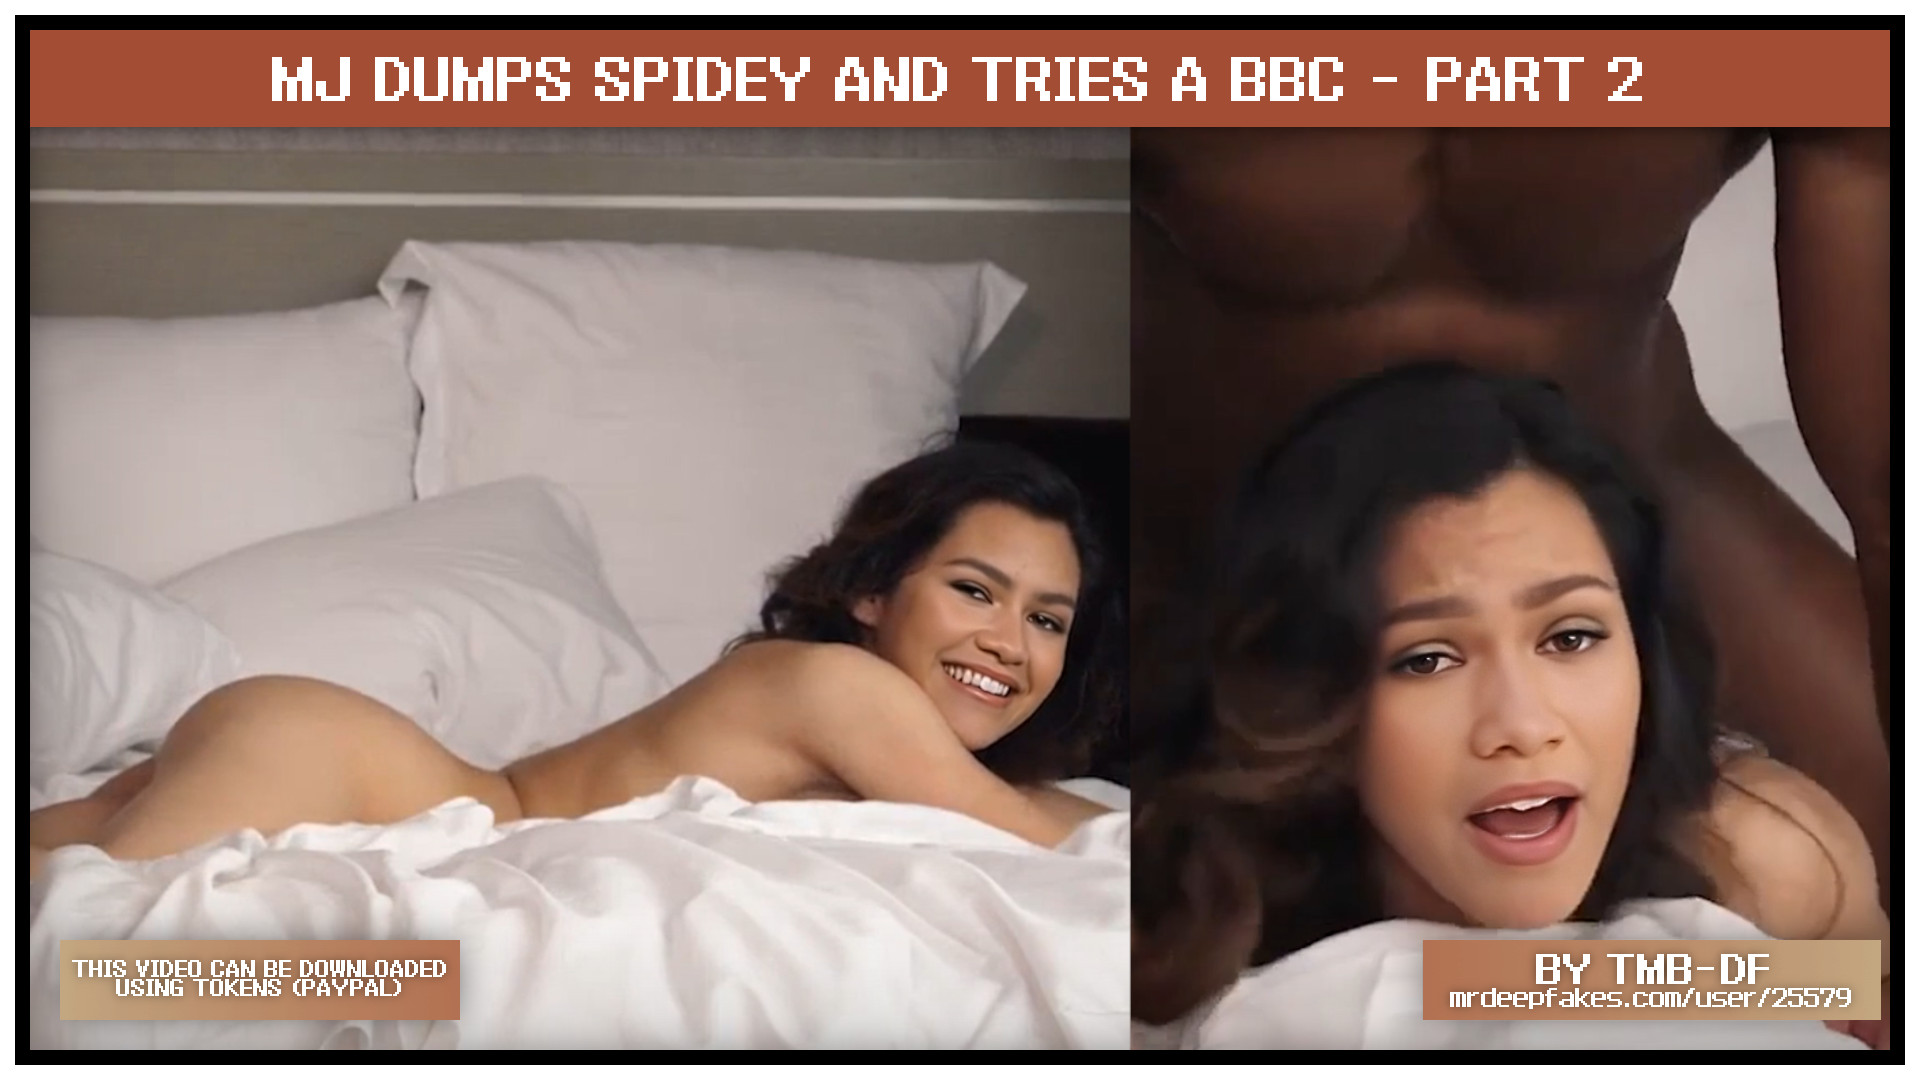 MJ dumps Spidey and tries a BBC - Zendaya lookalike Deepfake 2 - part 2